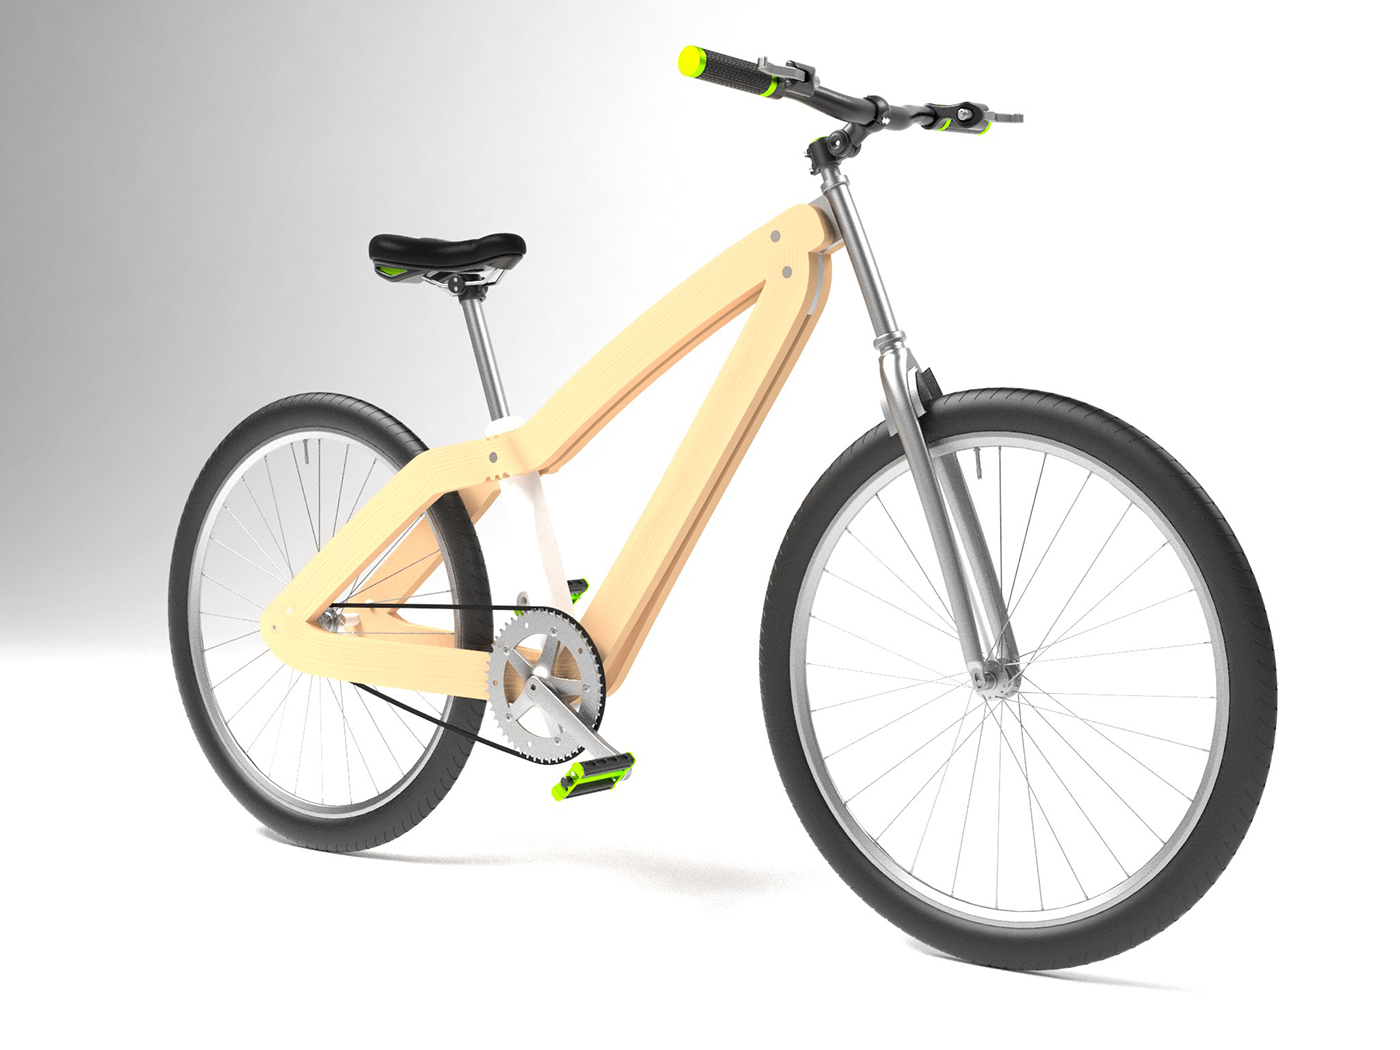 Bike wood bike wood Engineering  daniele caccavale clarita caliendo antonio basilicata eco design design trasportation design